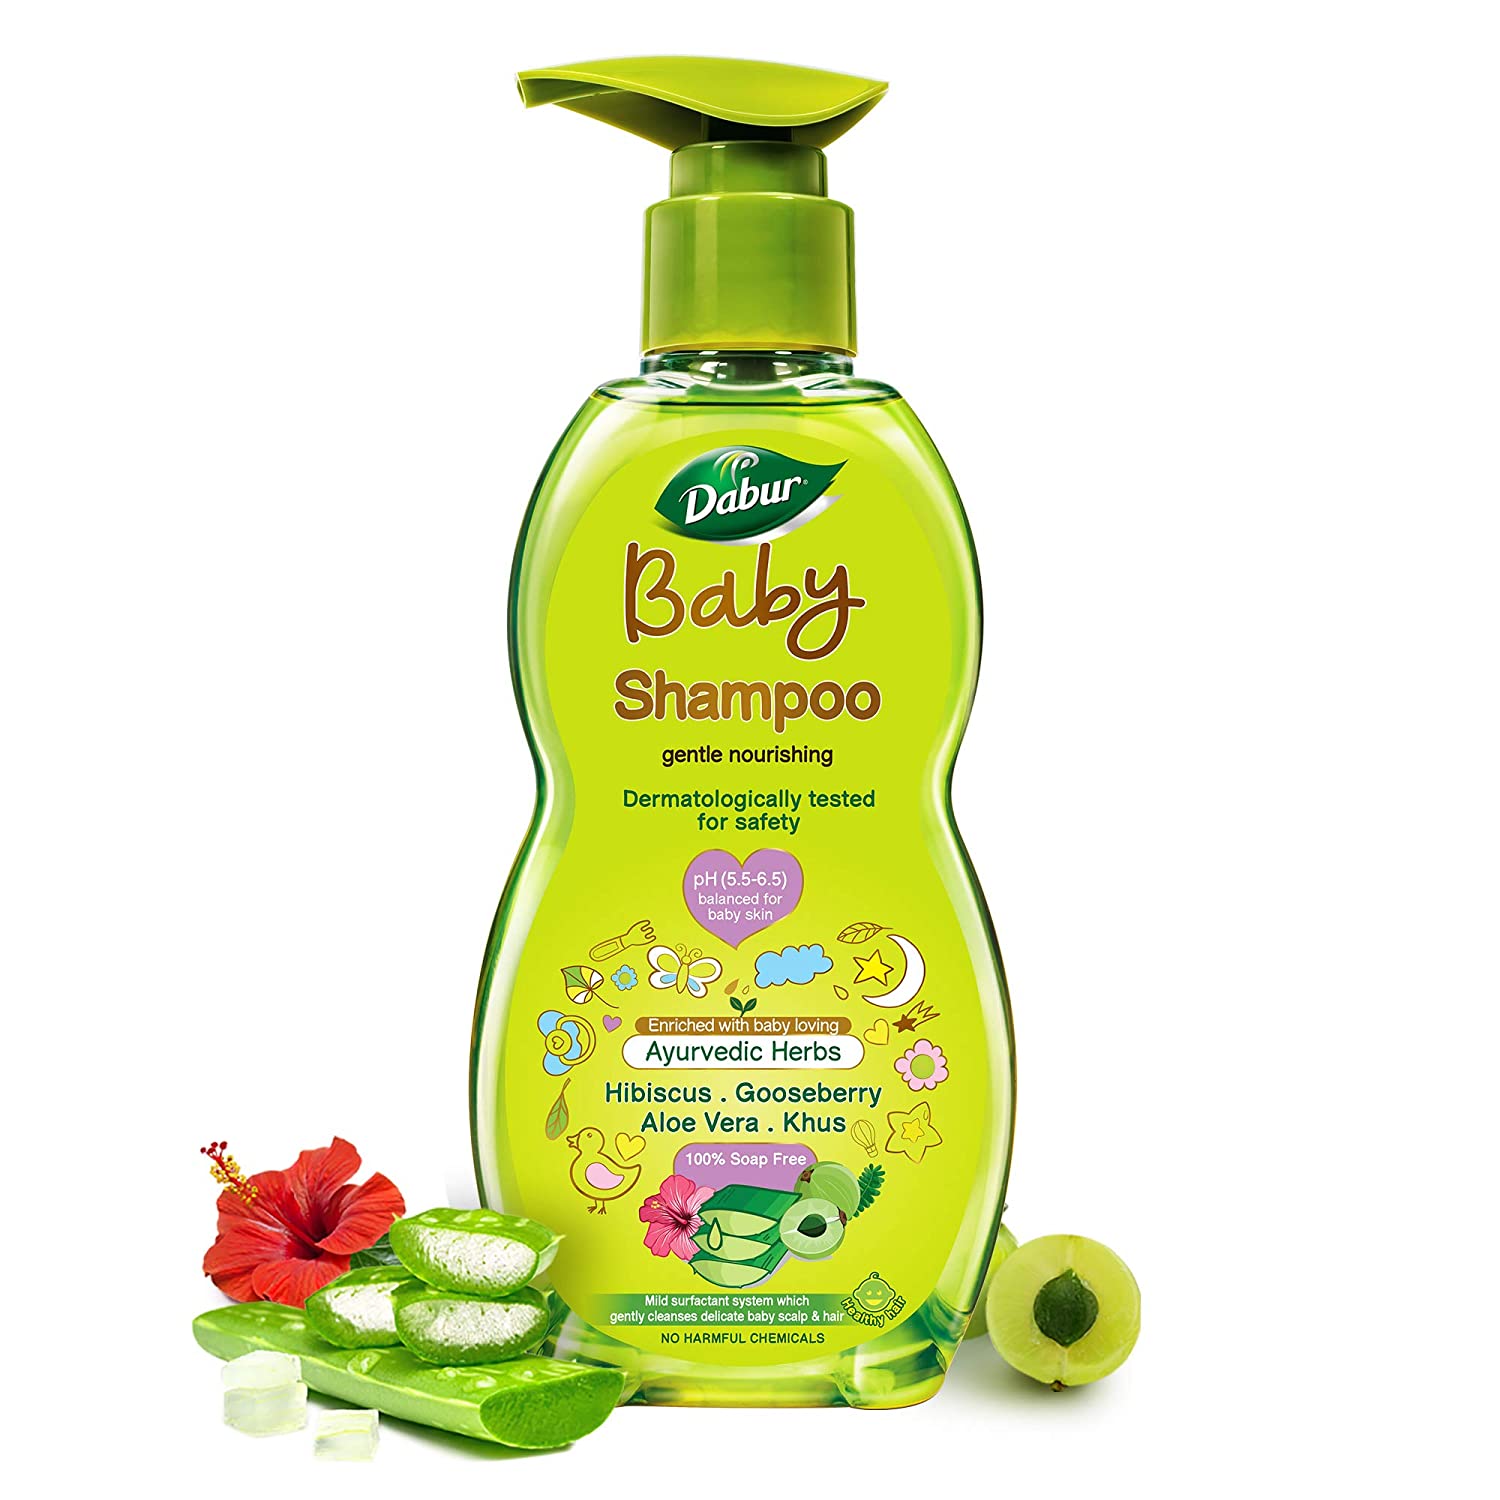 Dabur Gentle Nourishing Baby Shampoo